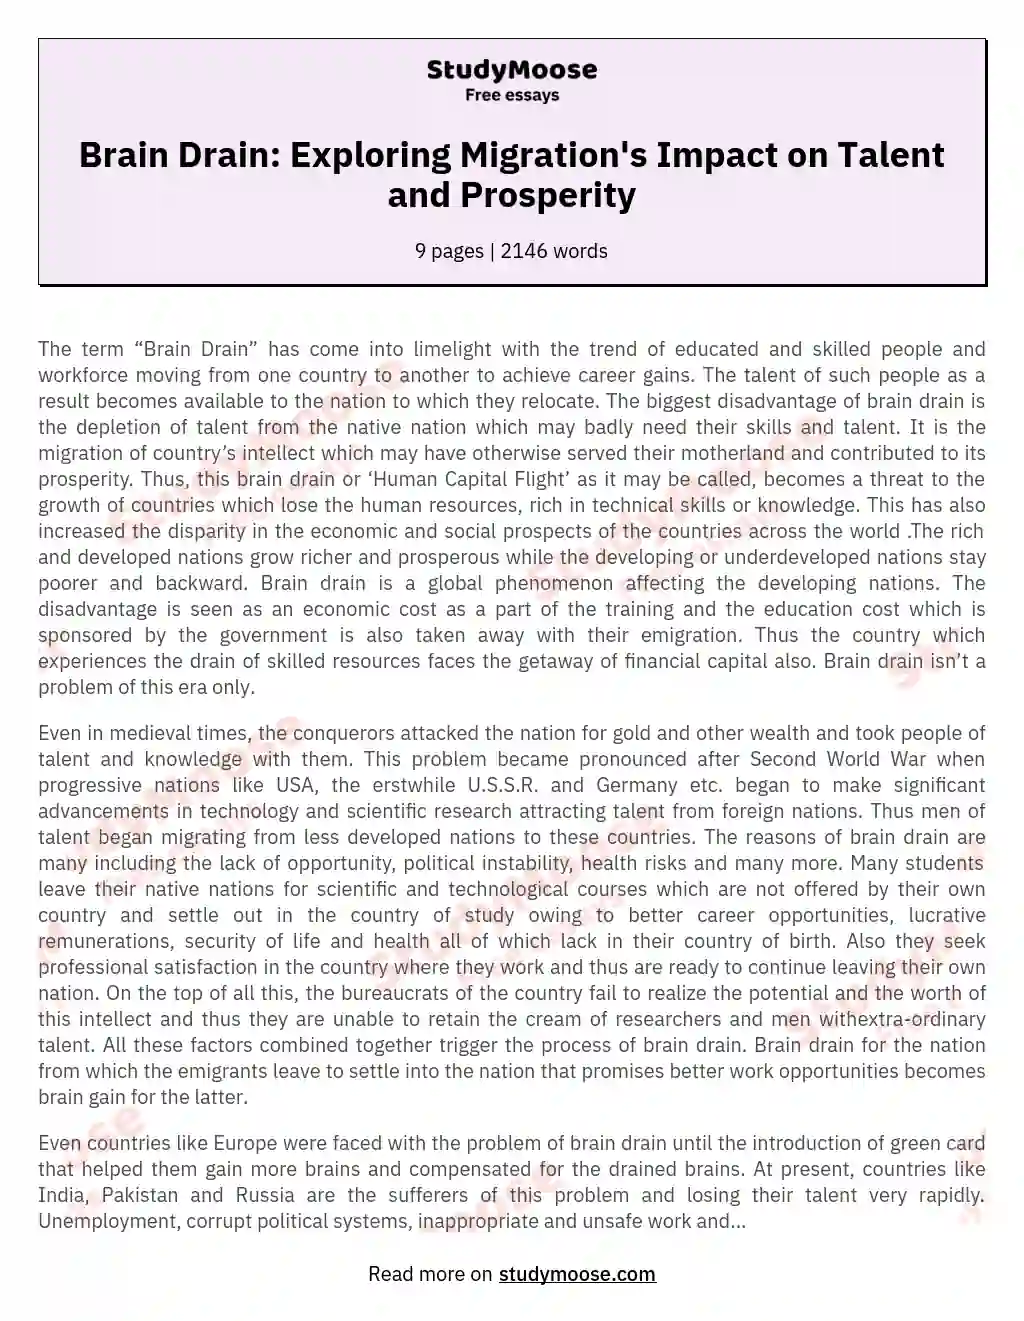 Brain Drain: Exploring Migration's Impact on Talent and Prosperity essay